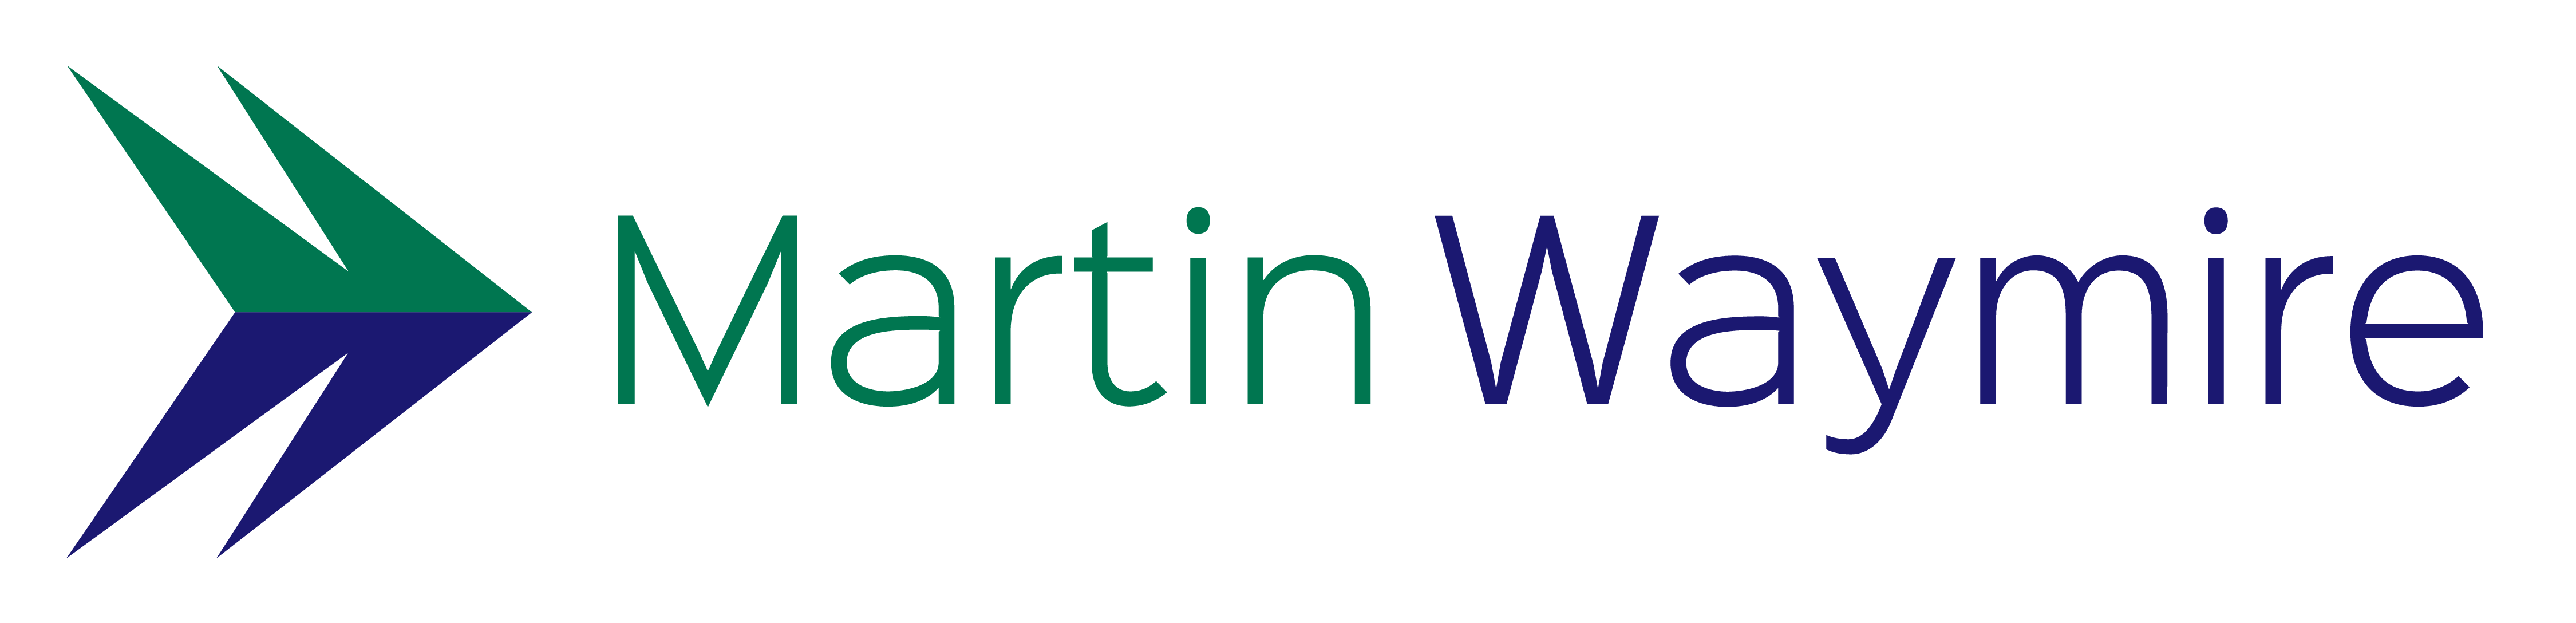  Martin Waymire logo